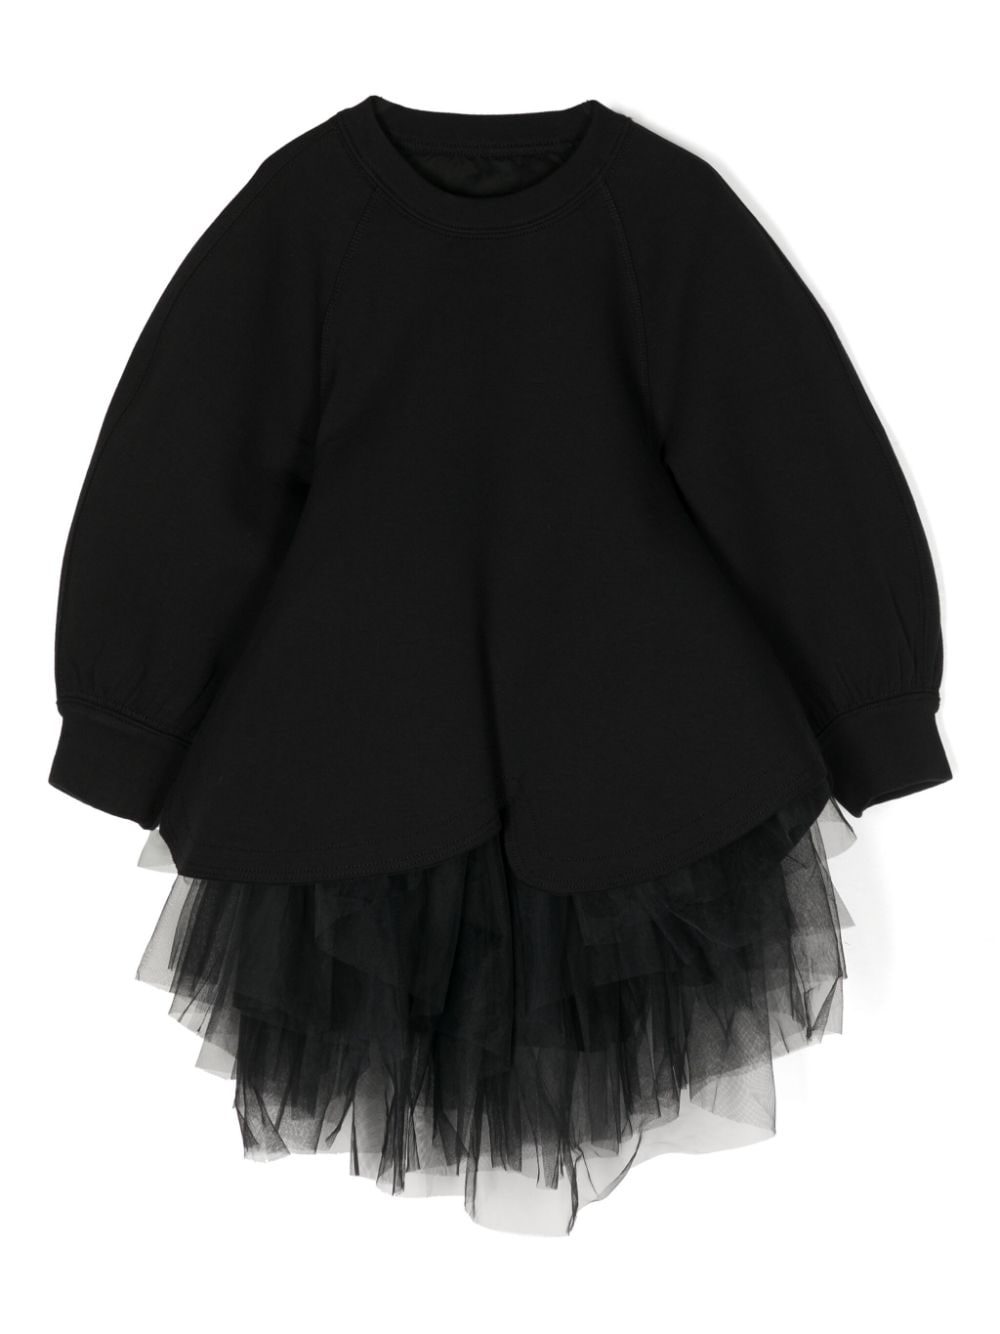 jnby by JNBY tulle-insert sweatshirt dress - Black von jnby by JNBY